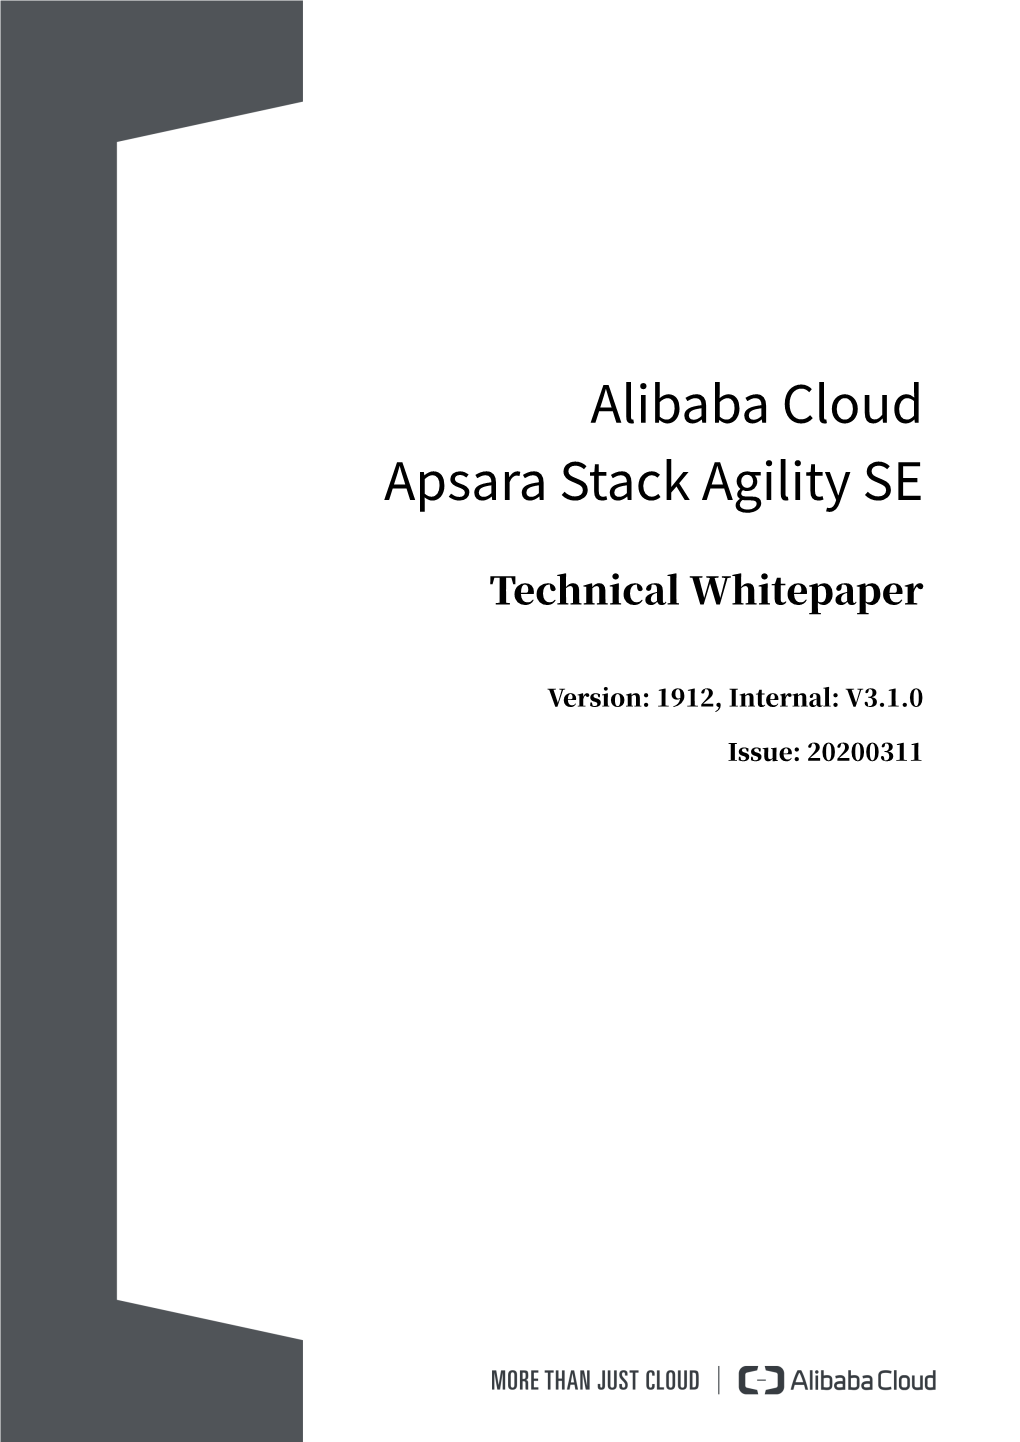 Alibaba Cloud Apsara Stack Agility SE